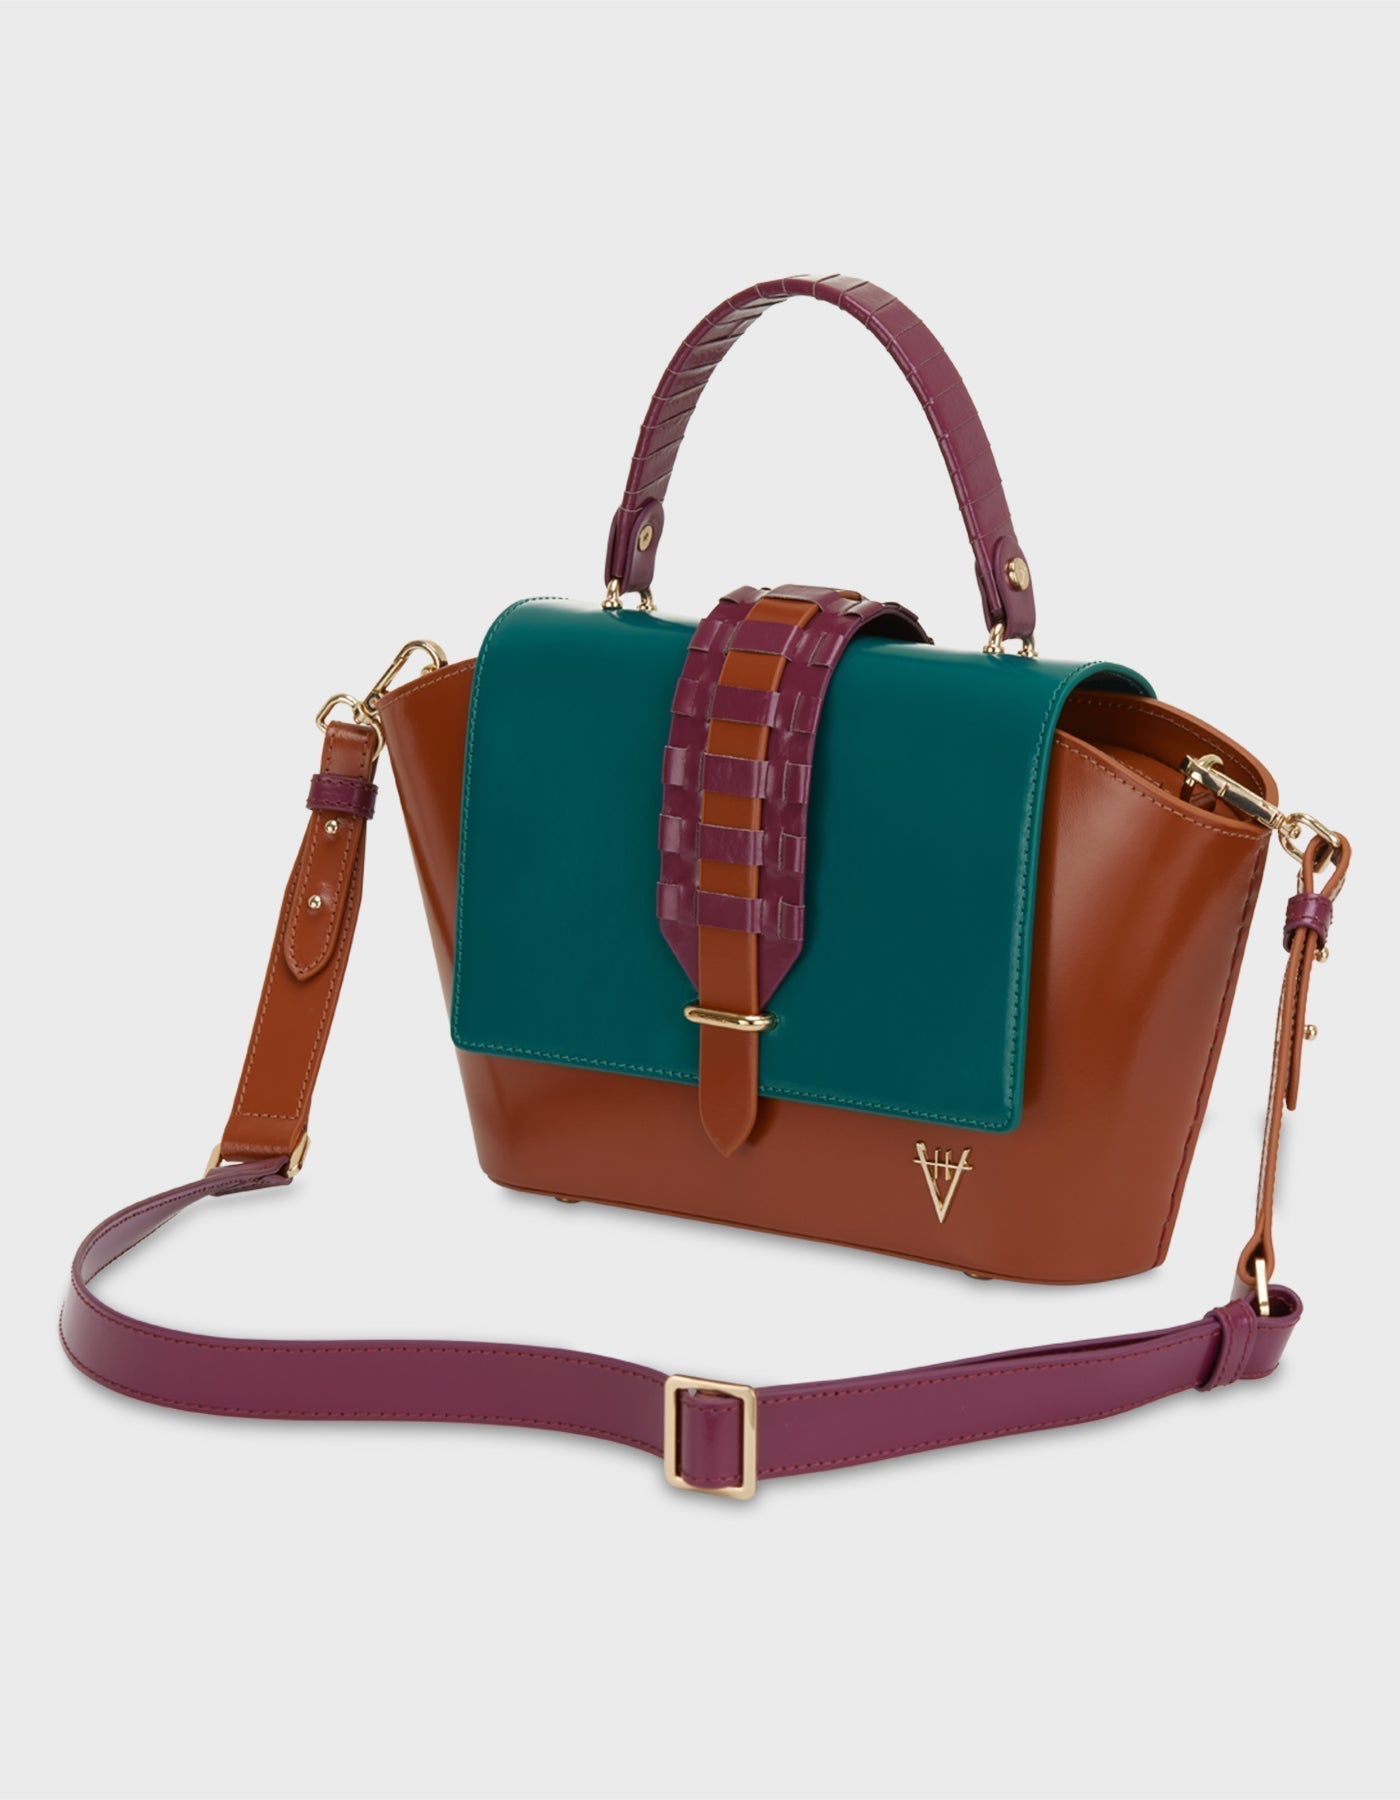 Ventus Shoulder Bag - Finest Quality HiVa Atelier GmbH Leather Accessories